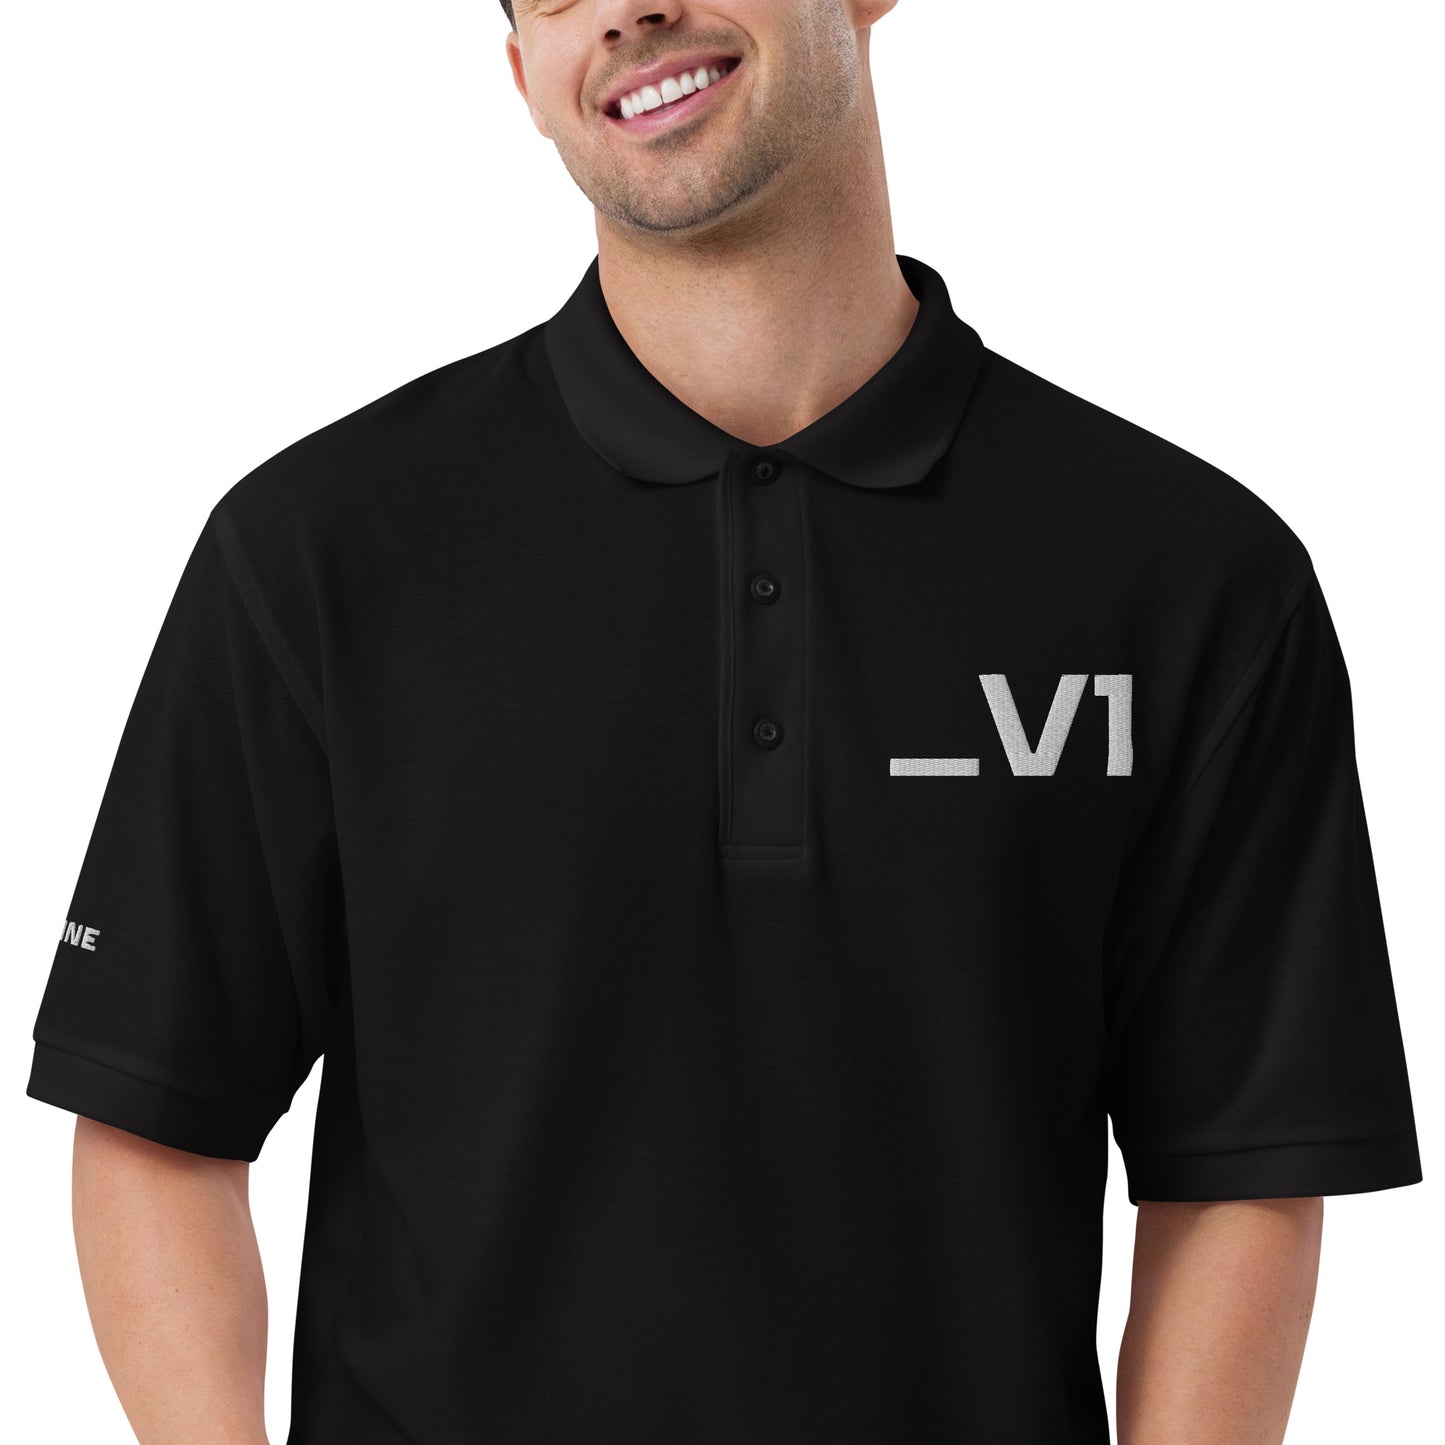 _V1 Embroidered Men's Premium Polo